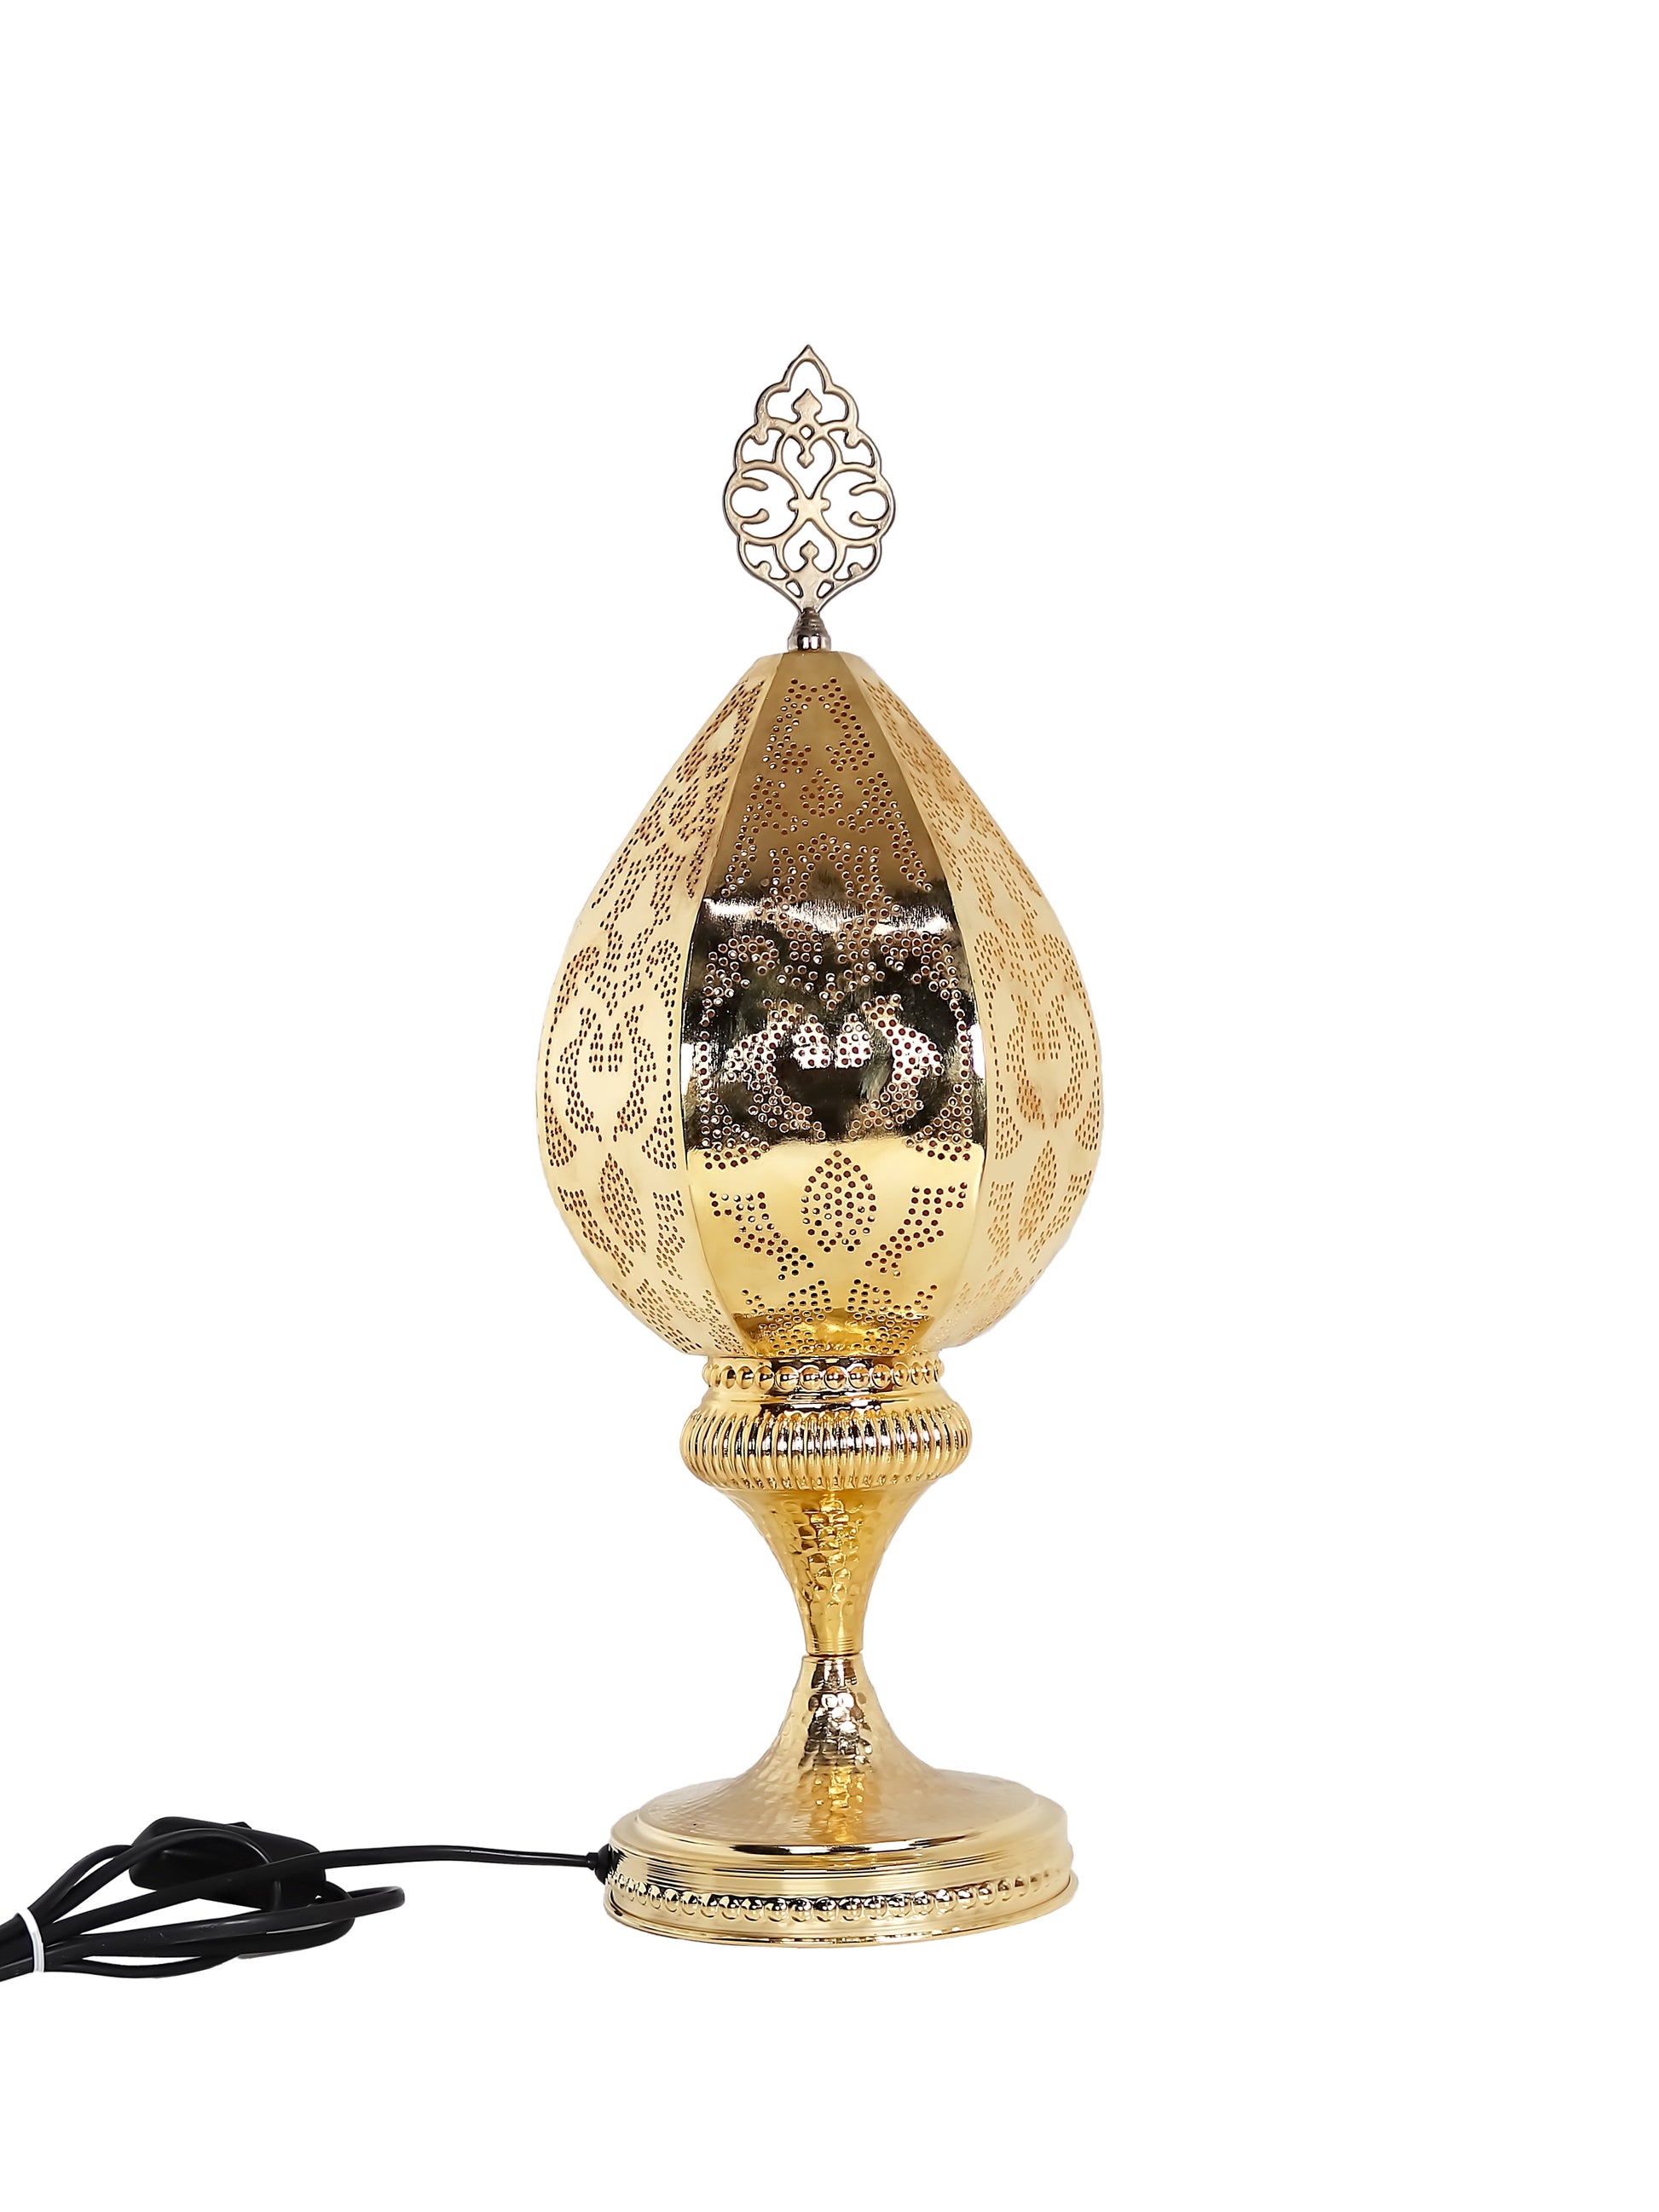 Morrocan Pierced Metal Table Lamp